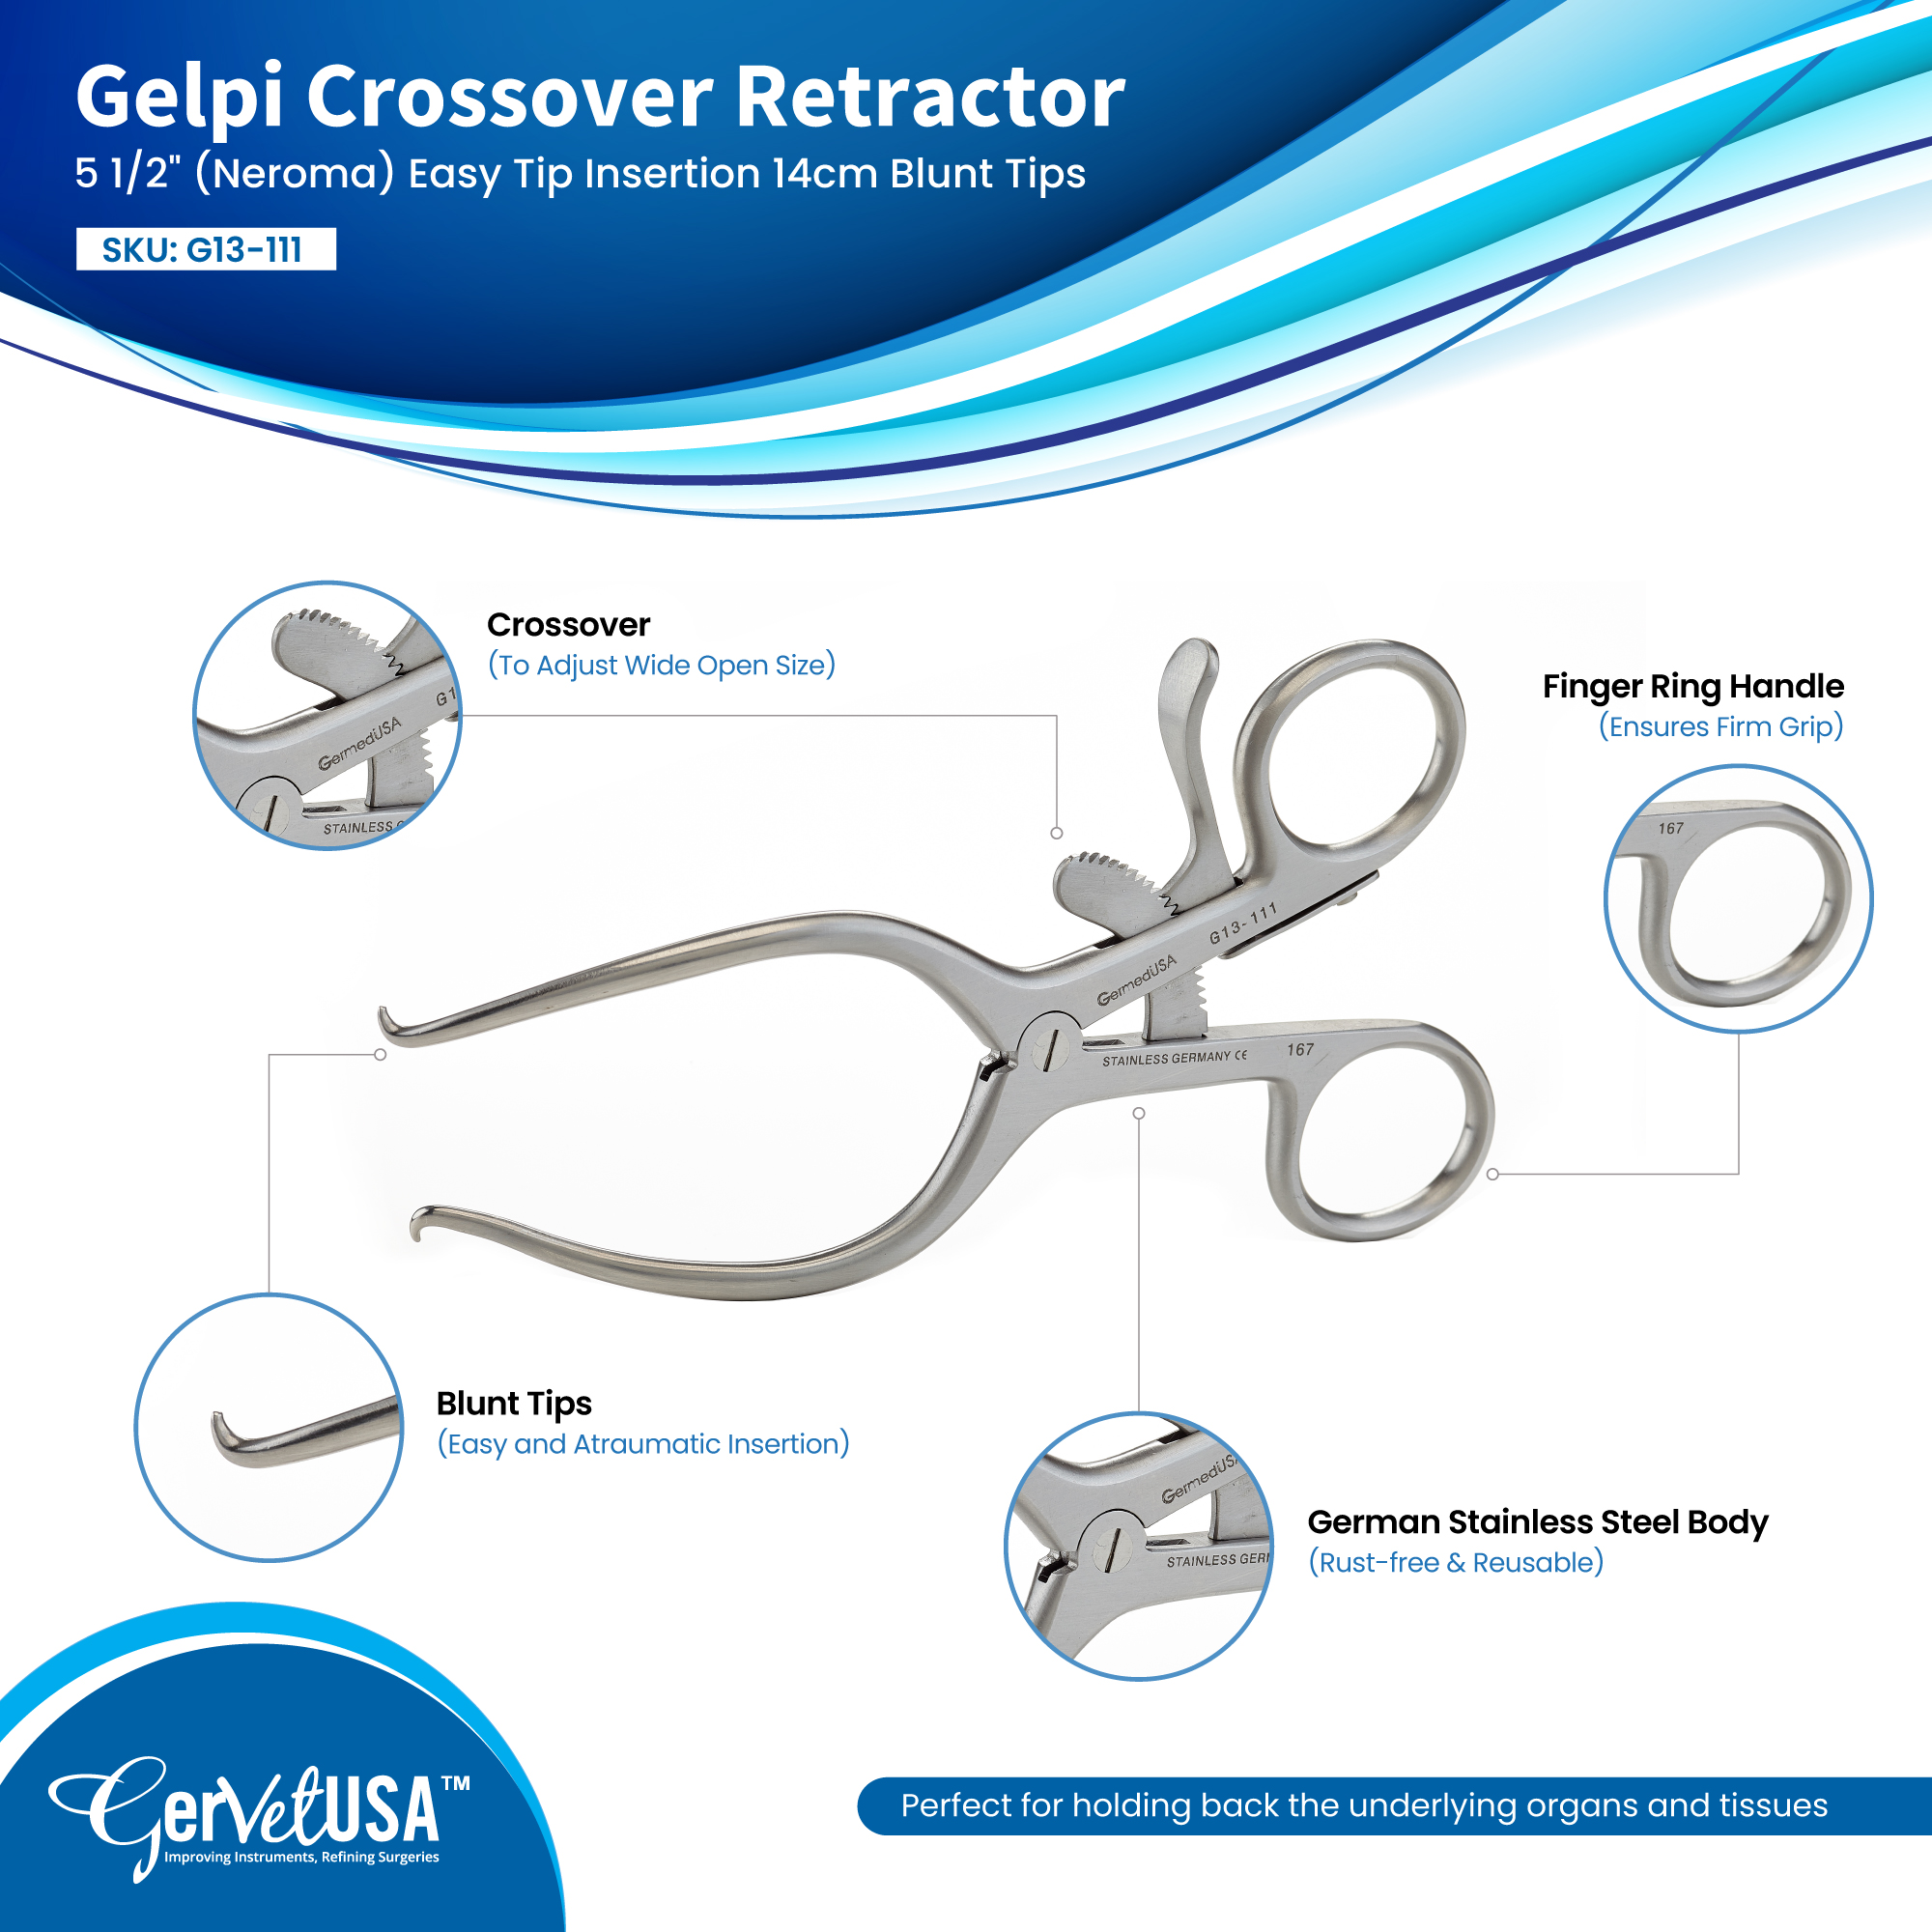 Gelpi Crossover Retractor 5 1/2" (Neroma) Easy Tip Insertion 14cm Blunt Tips